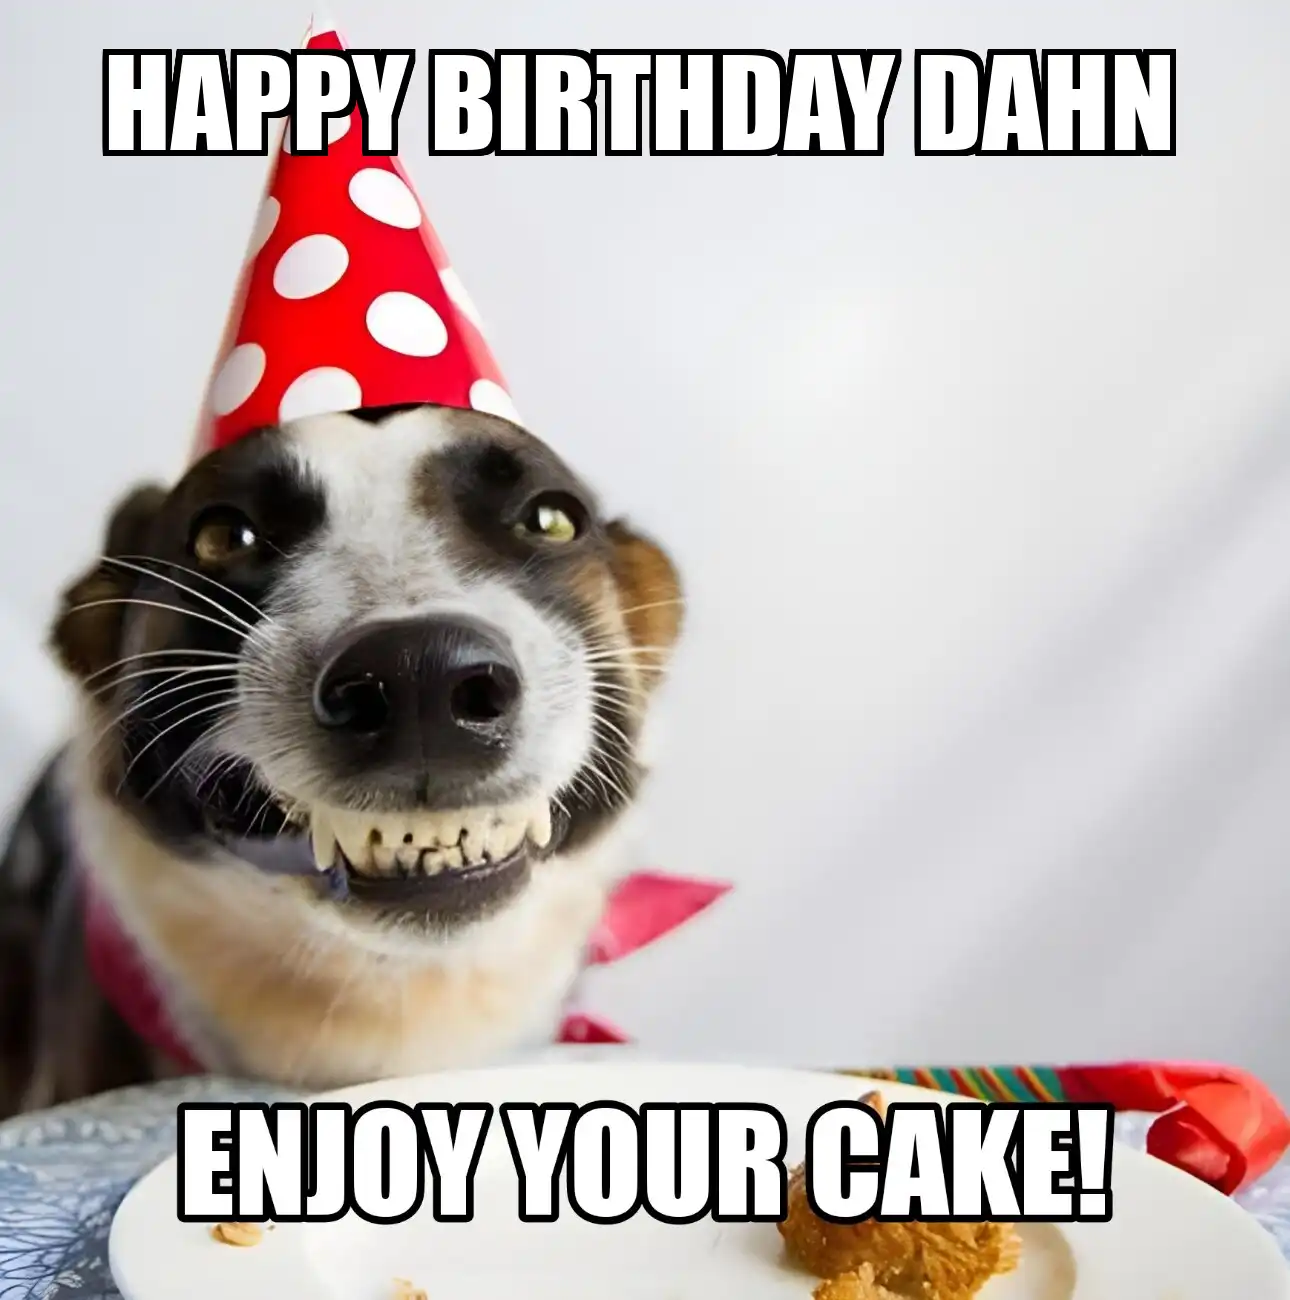 Happy Birthday Dahn Enjoy Your Cake Dog Meme